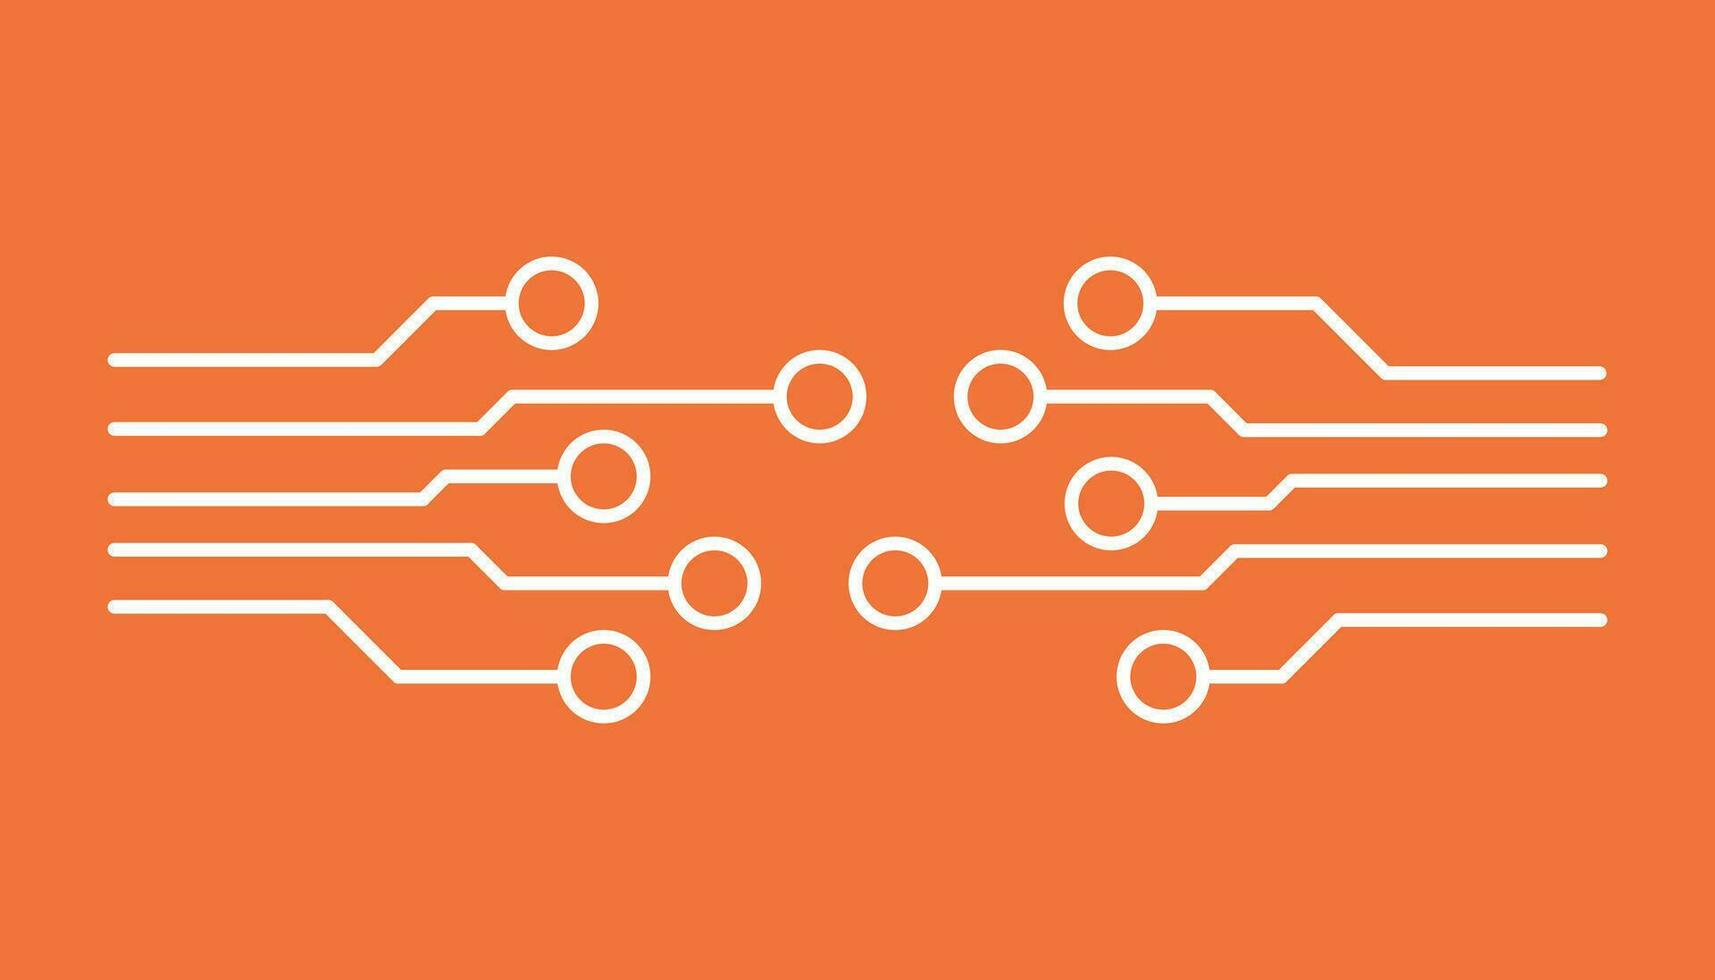 Circuit board icon. Technology scheme symbol flat vector illustration on orange background.